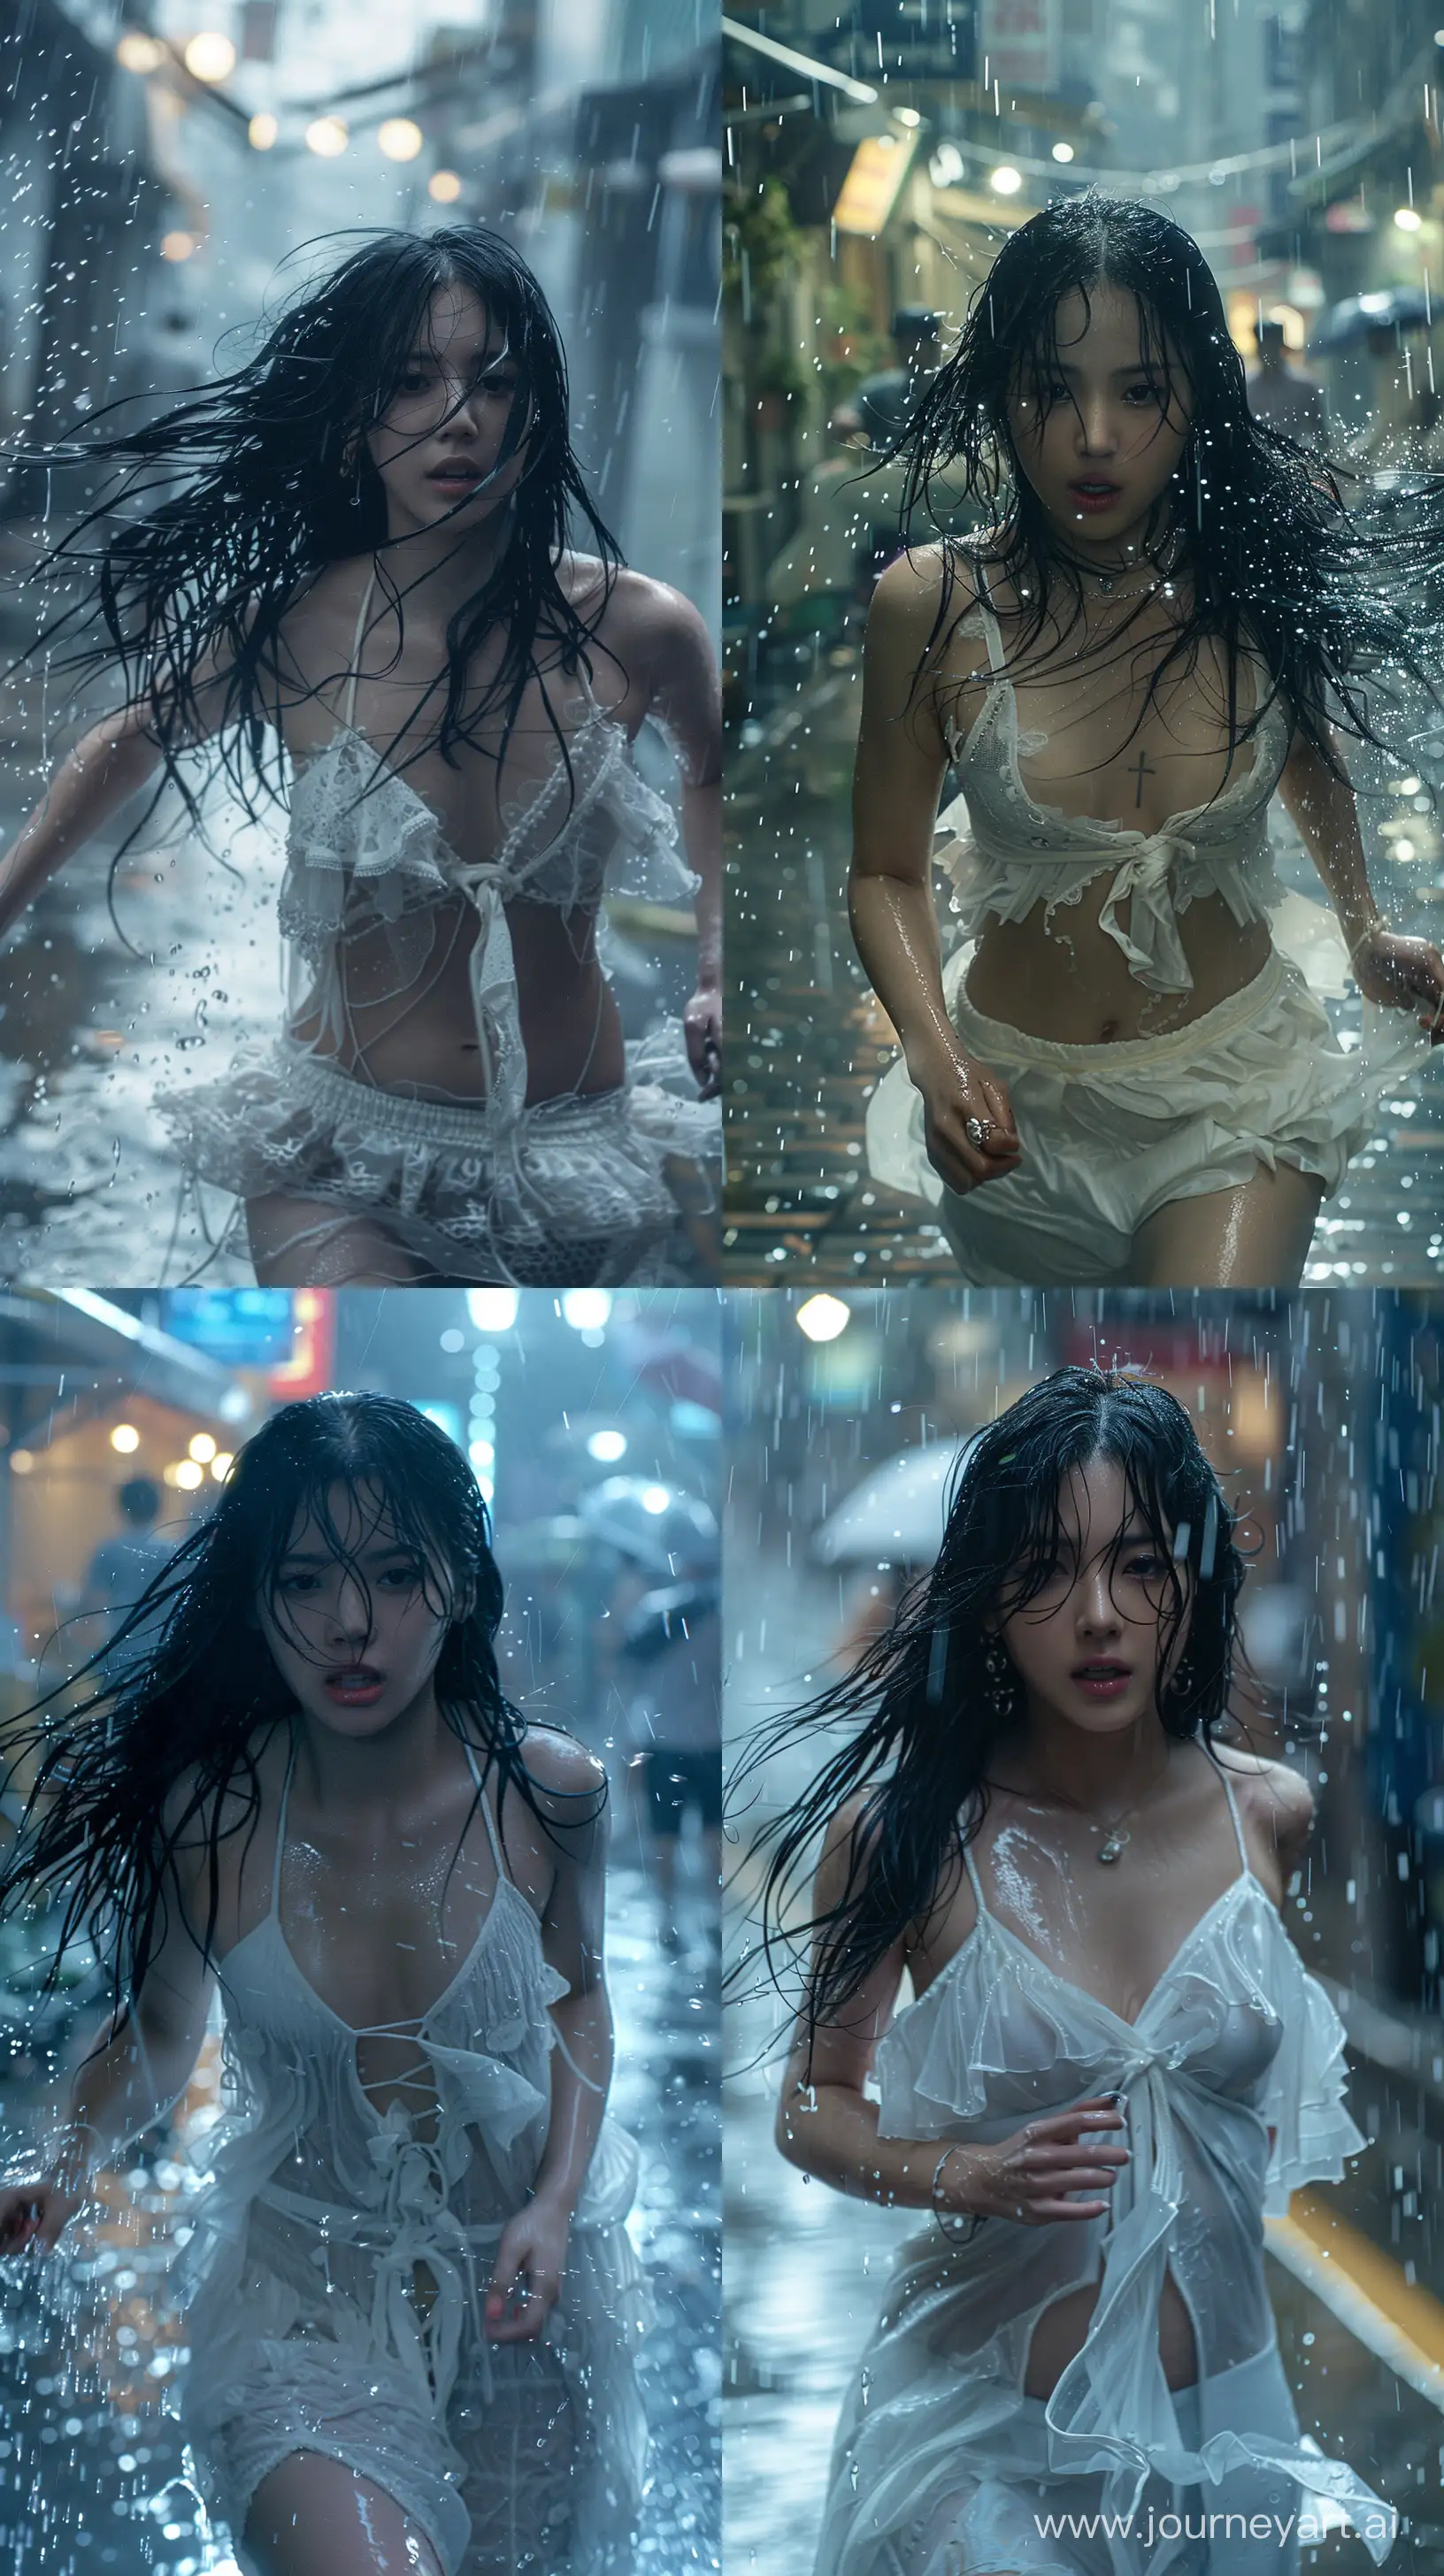 Elegant-Blackpinks-Jennie-Running-in-Rain-with-Wet-Hair-and-Dress